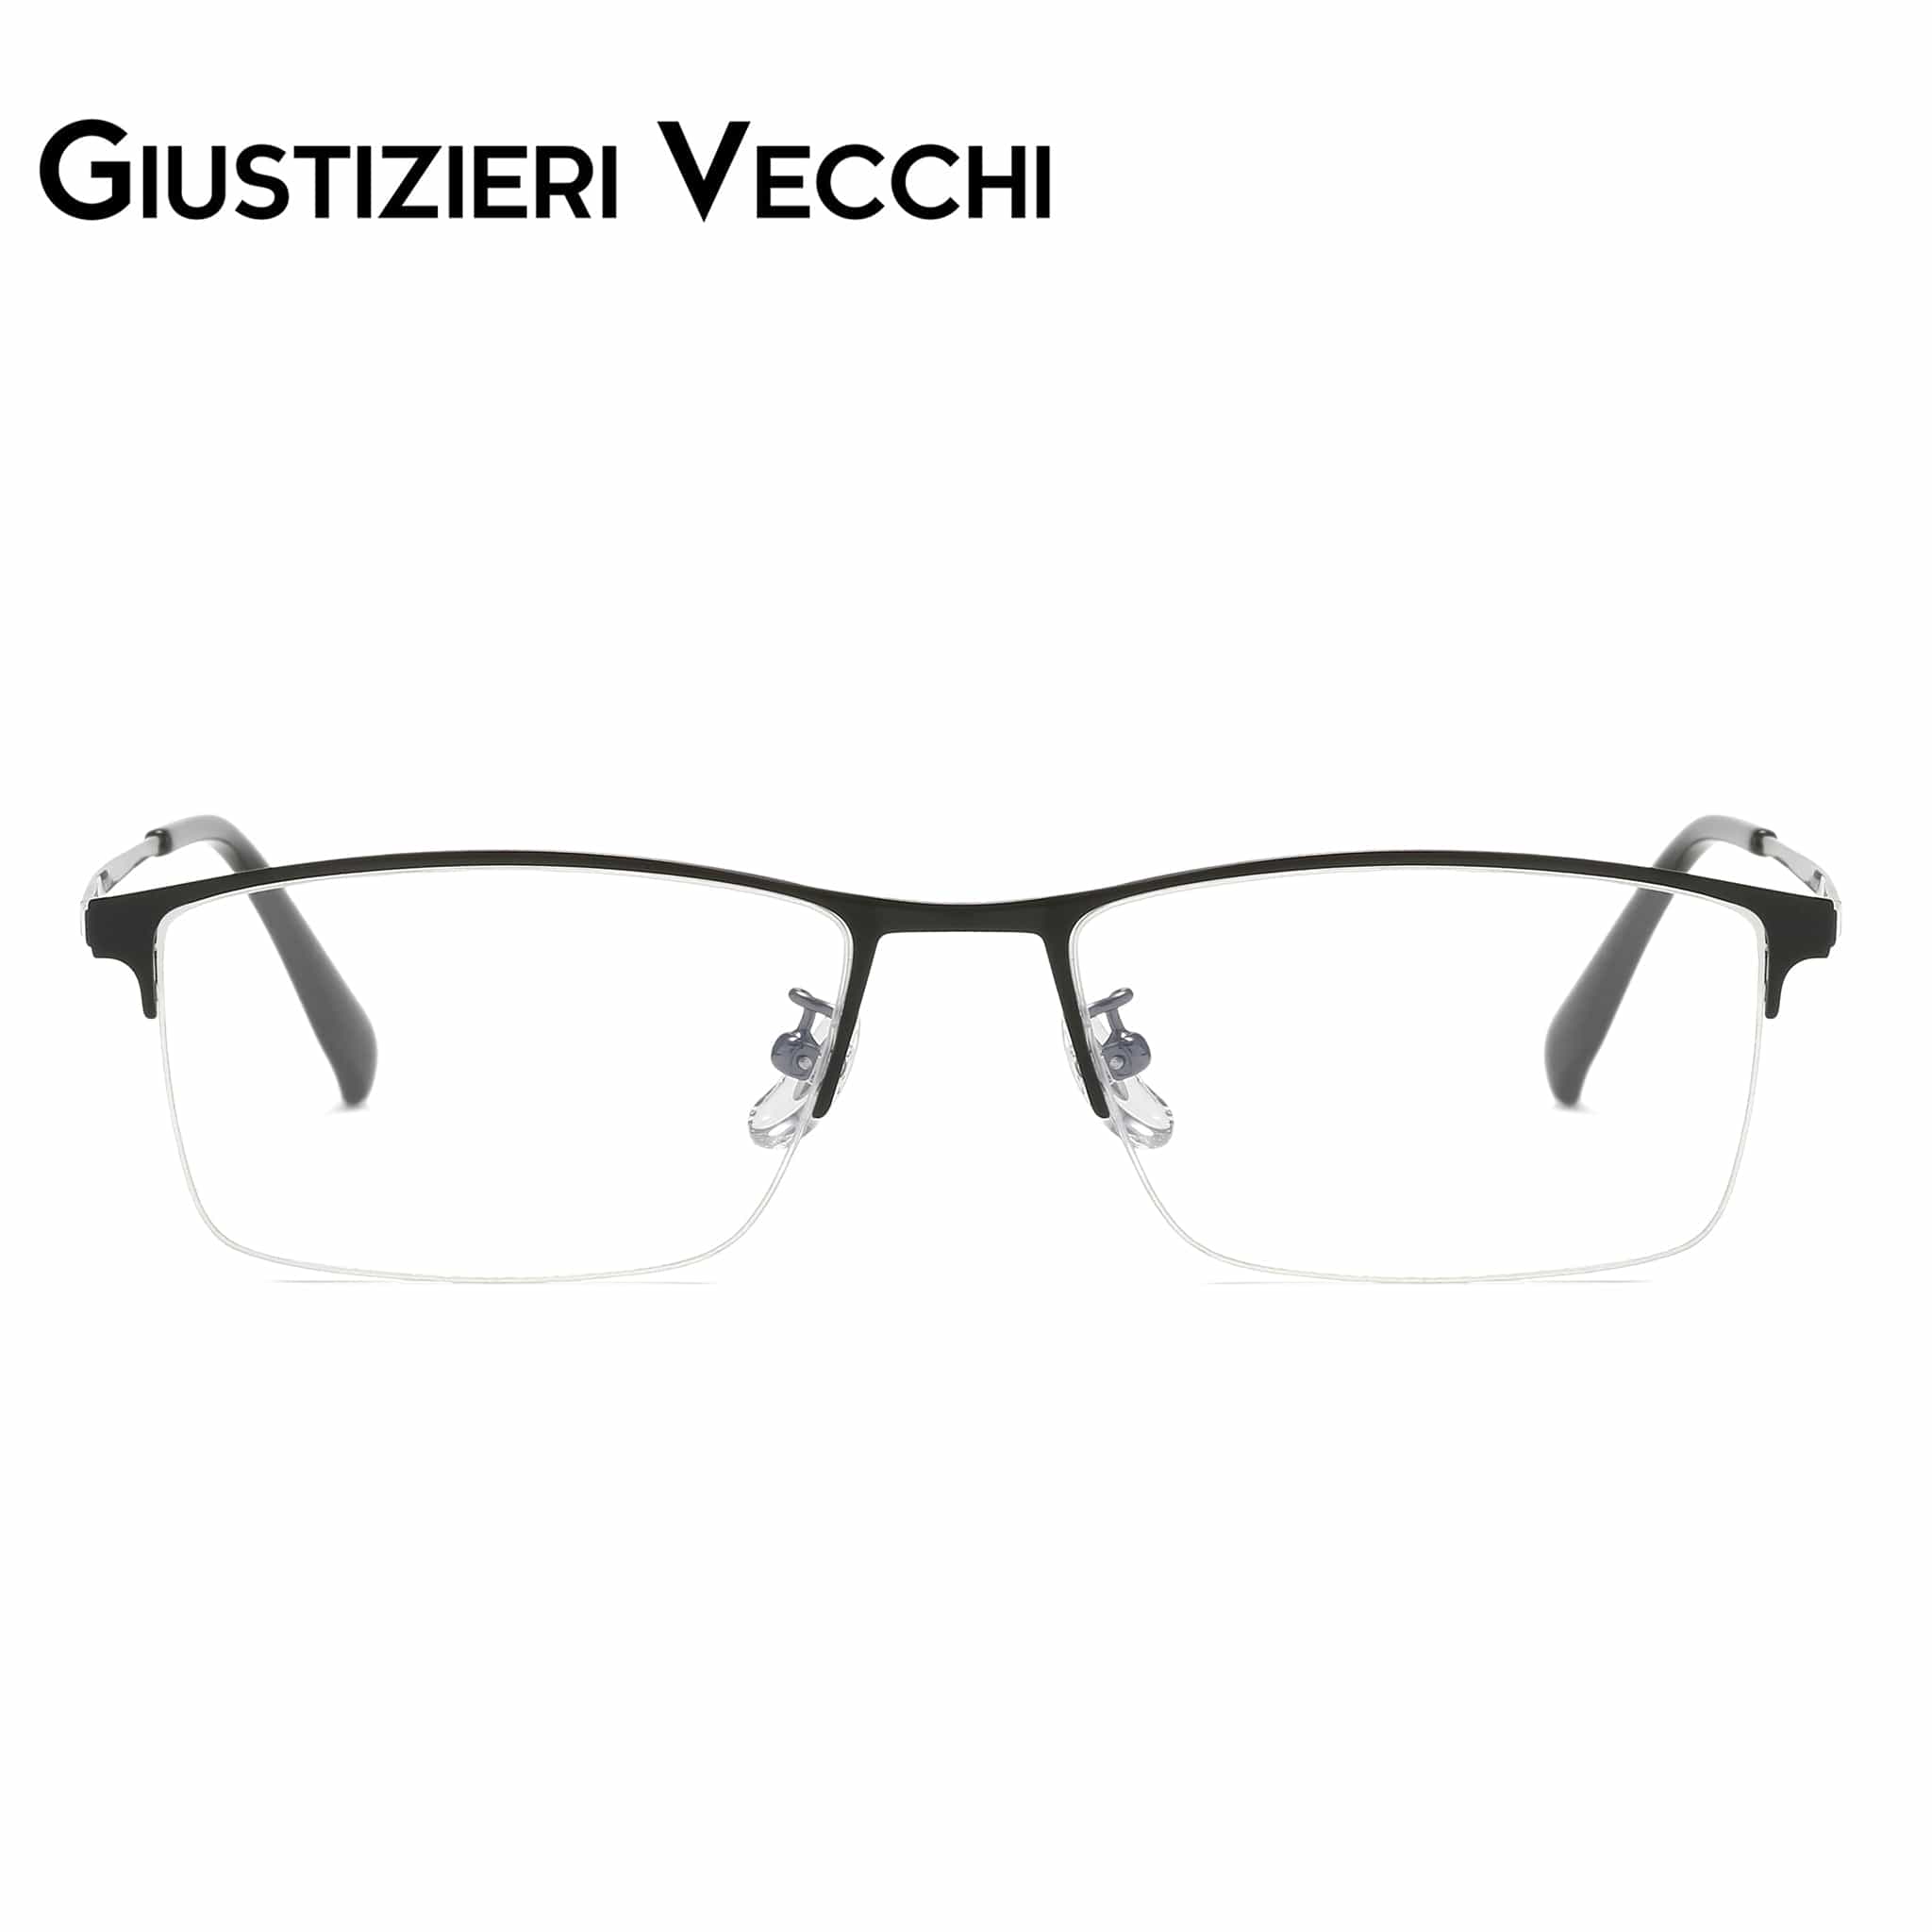 GIUSTIZIERI VECCHI Eyeglasses Medium / Black with Grey Thunderbolt Uno